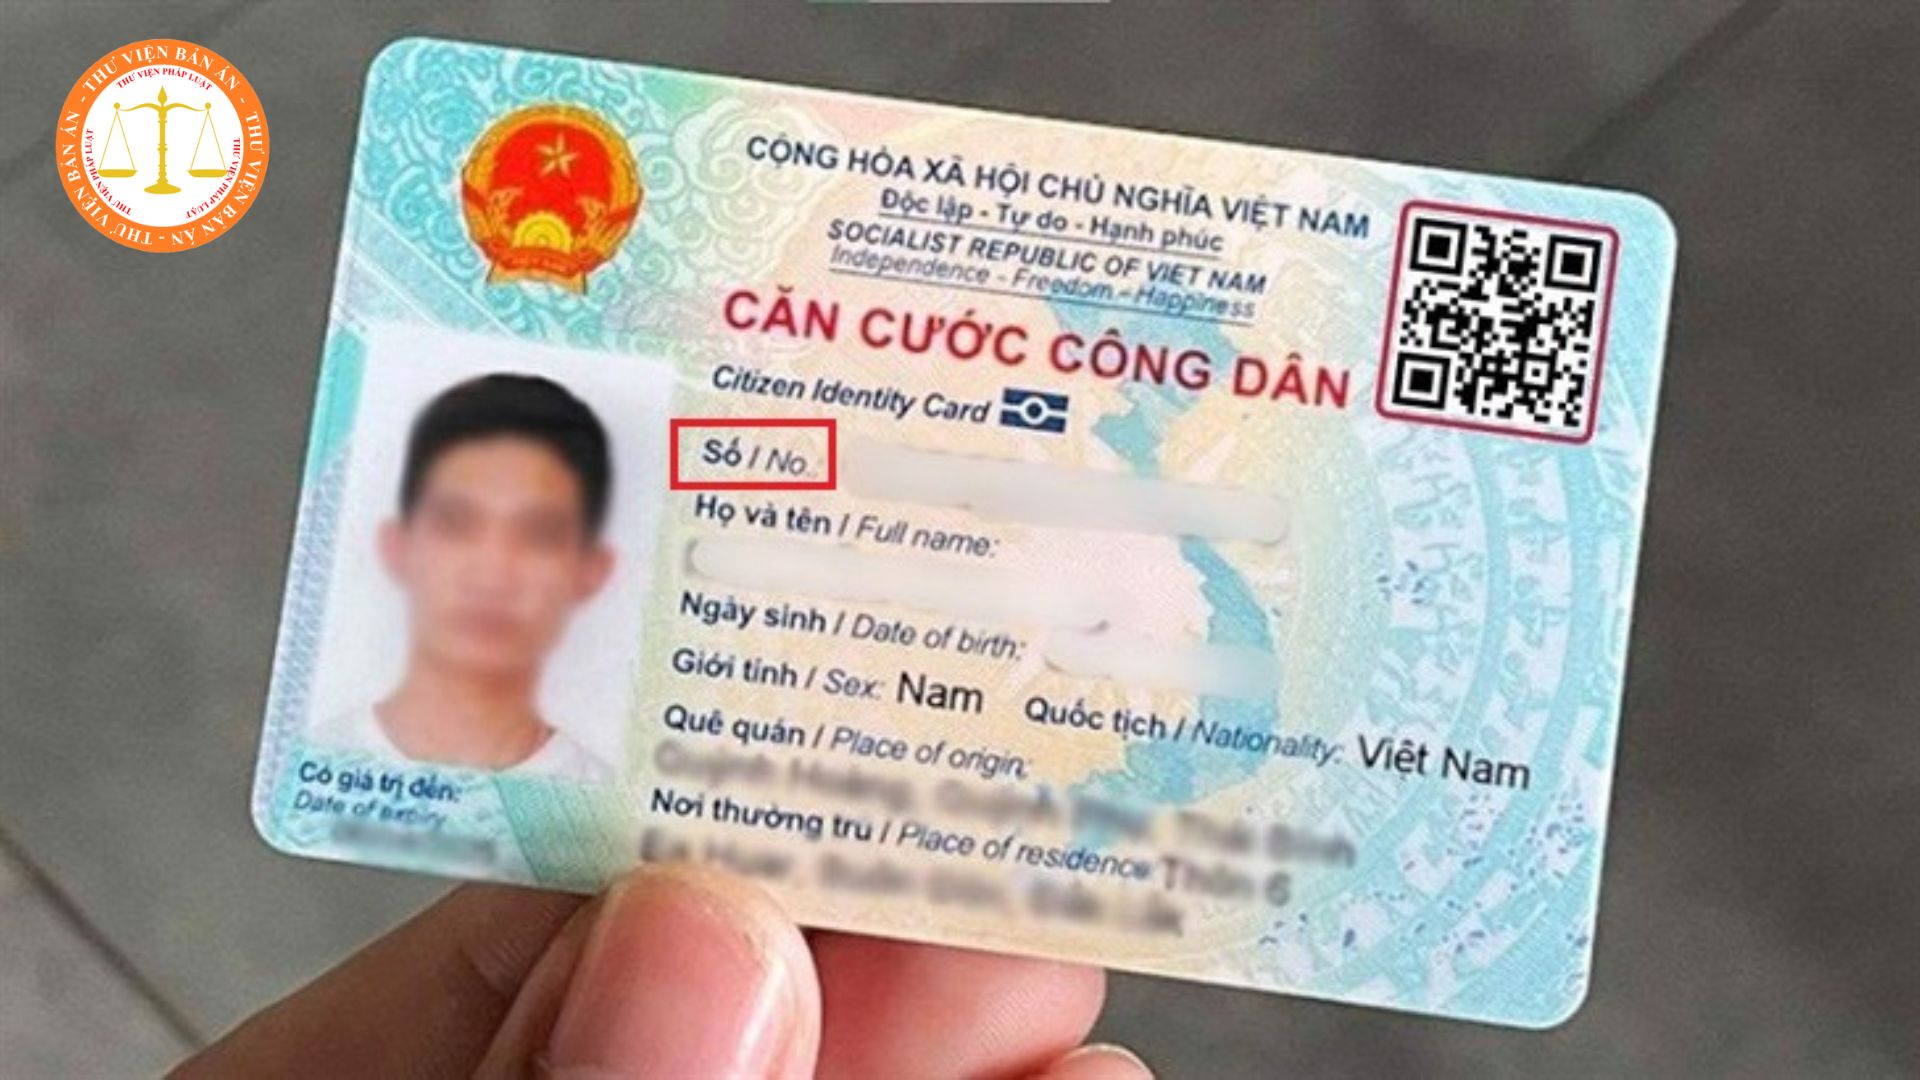 03 cases of re-establishment of personal identification number in Vietnam